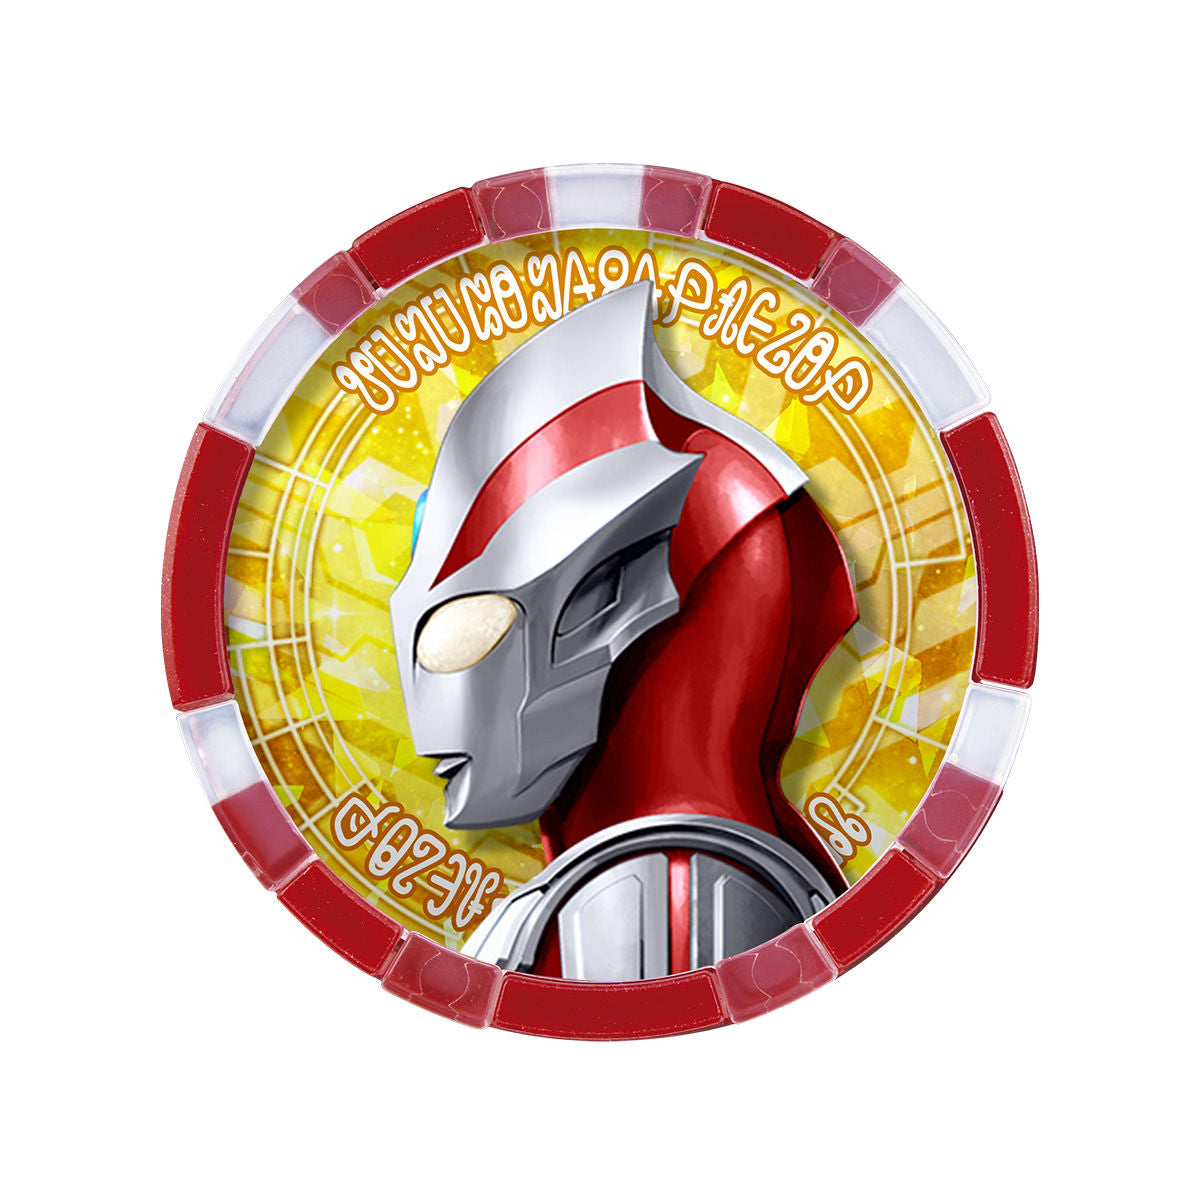 Ultraman Z GP Ultra Medal Set EX